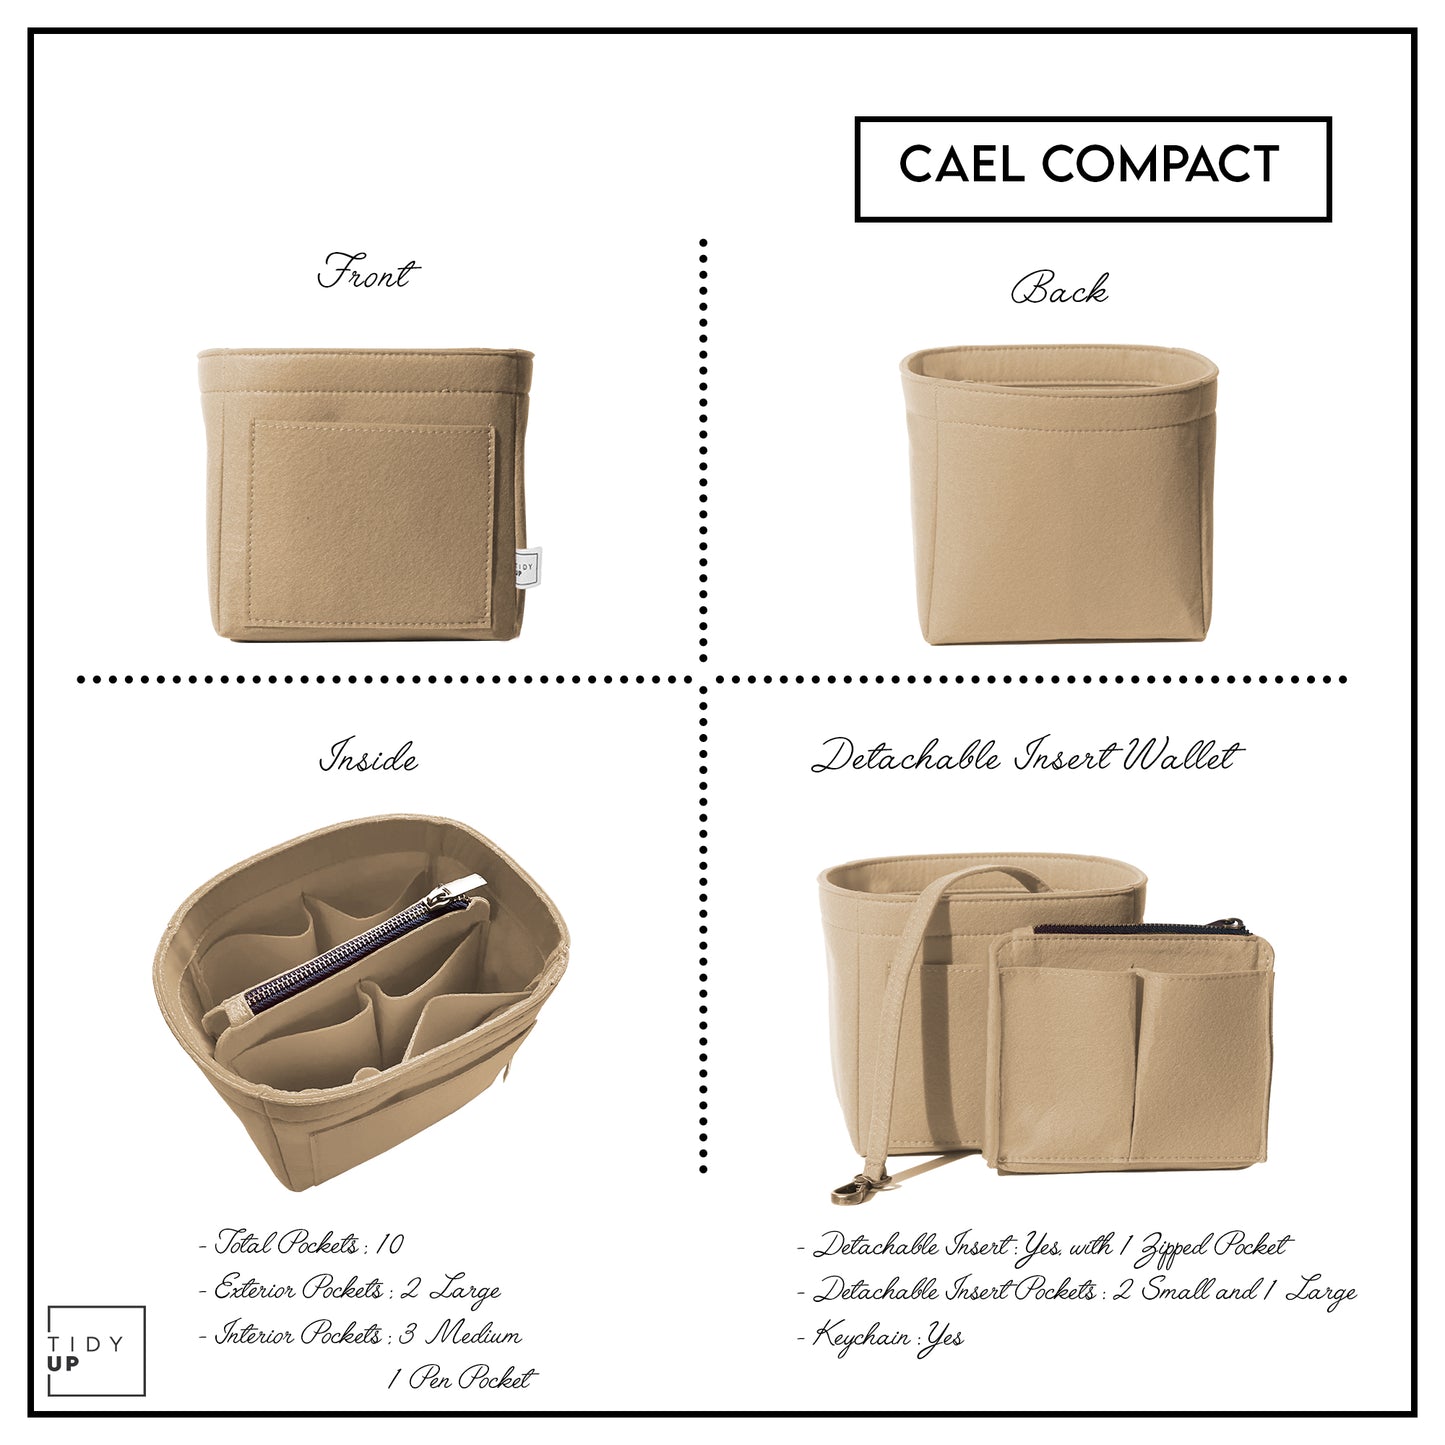 TidyUp Cael Compact Beige Bag Organiser All Sides